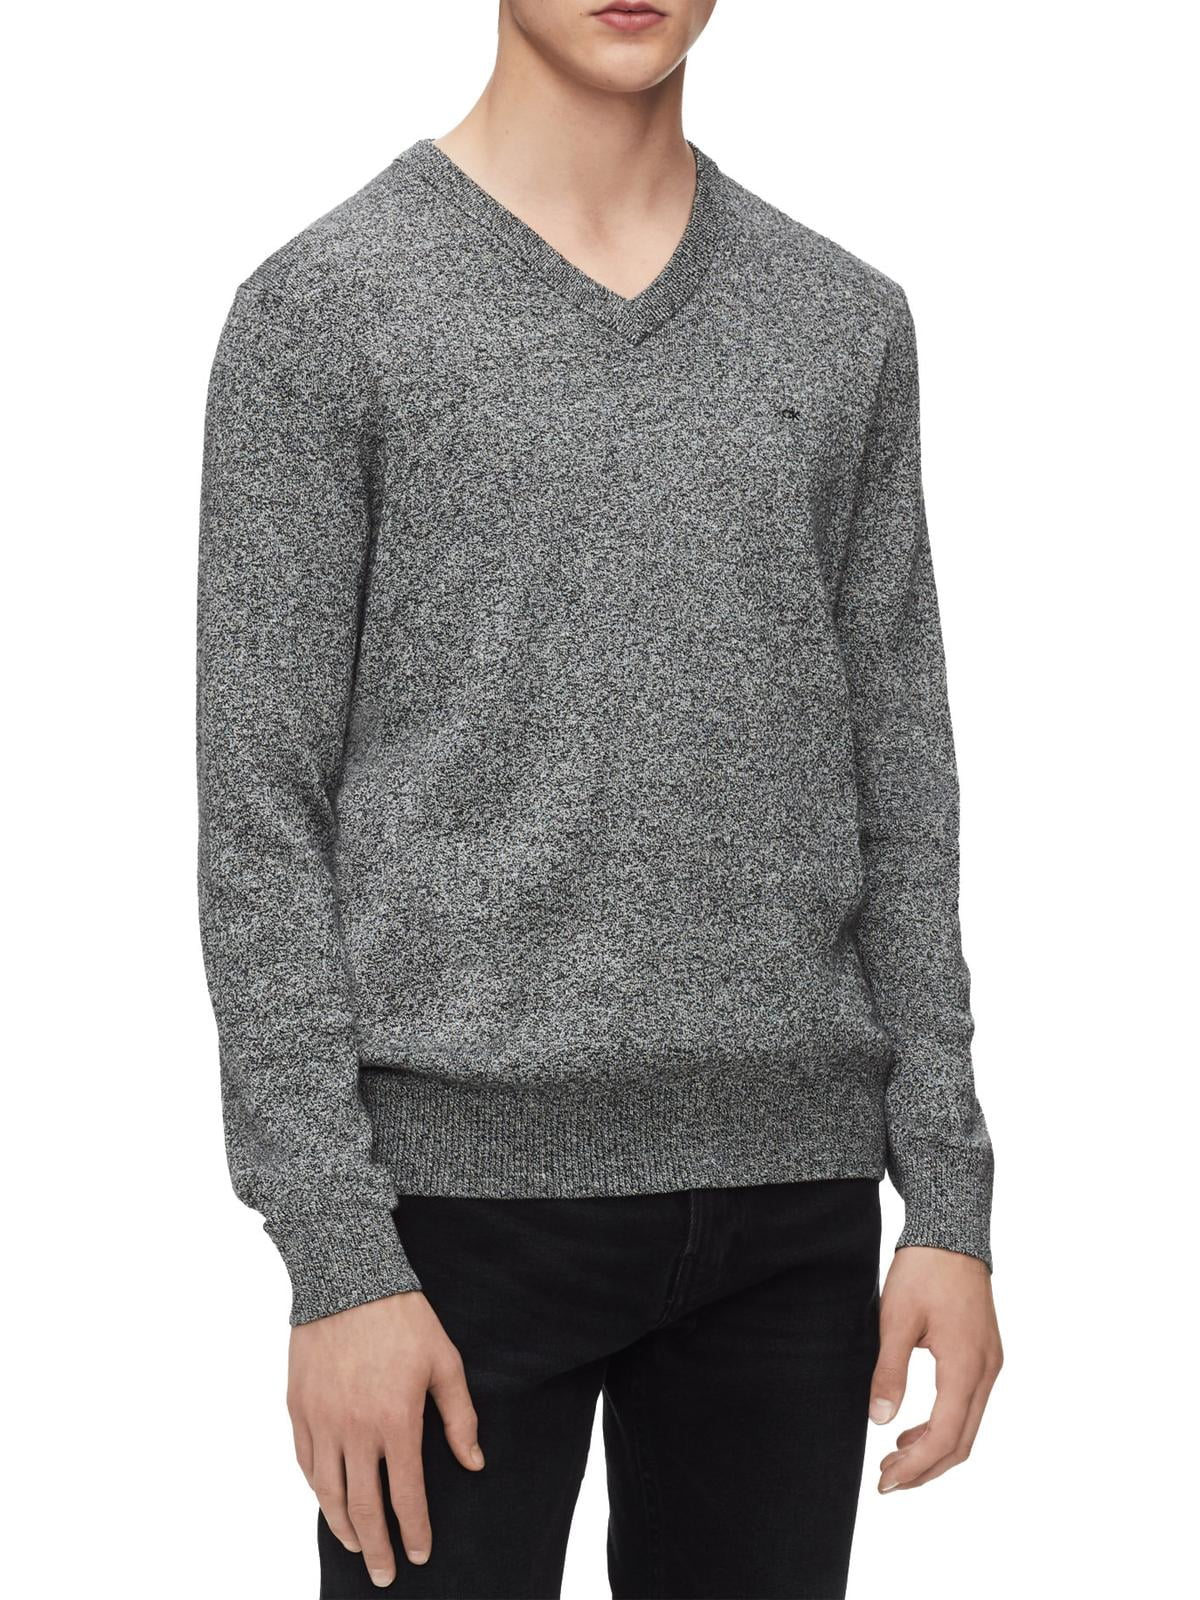 New Alfani Mens Regular Fit V Neck Twilight Teal Solid Pullover Sweater L 